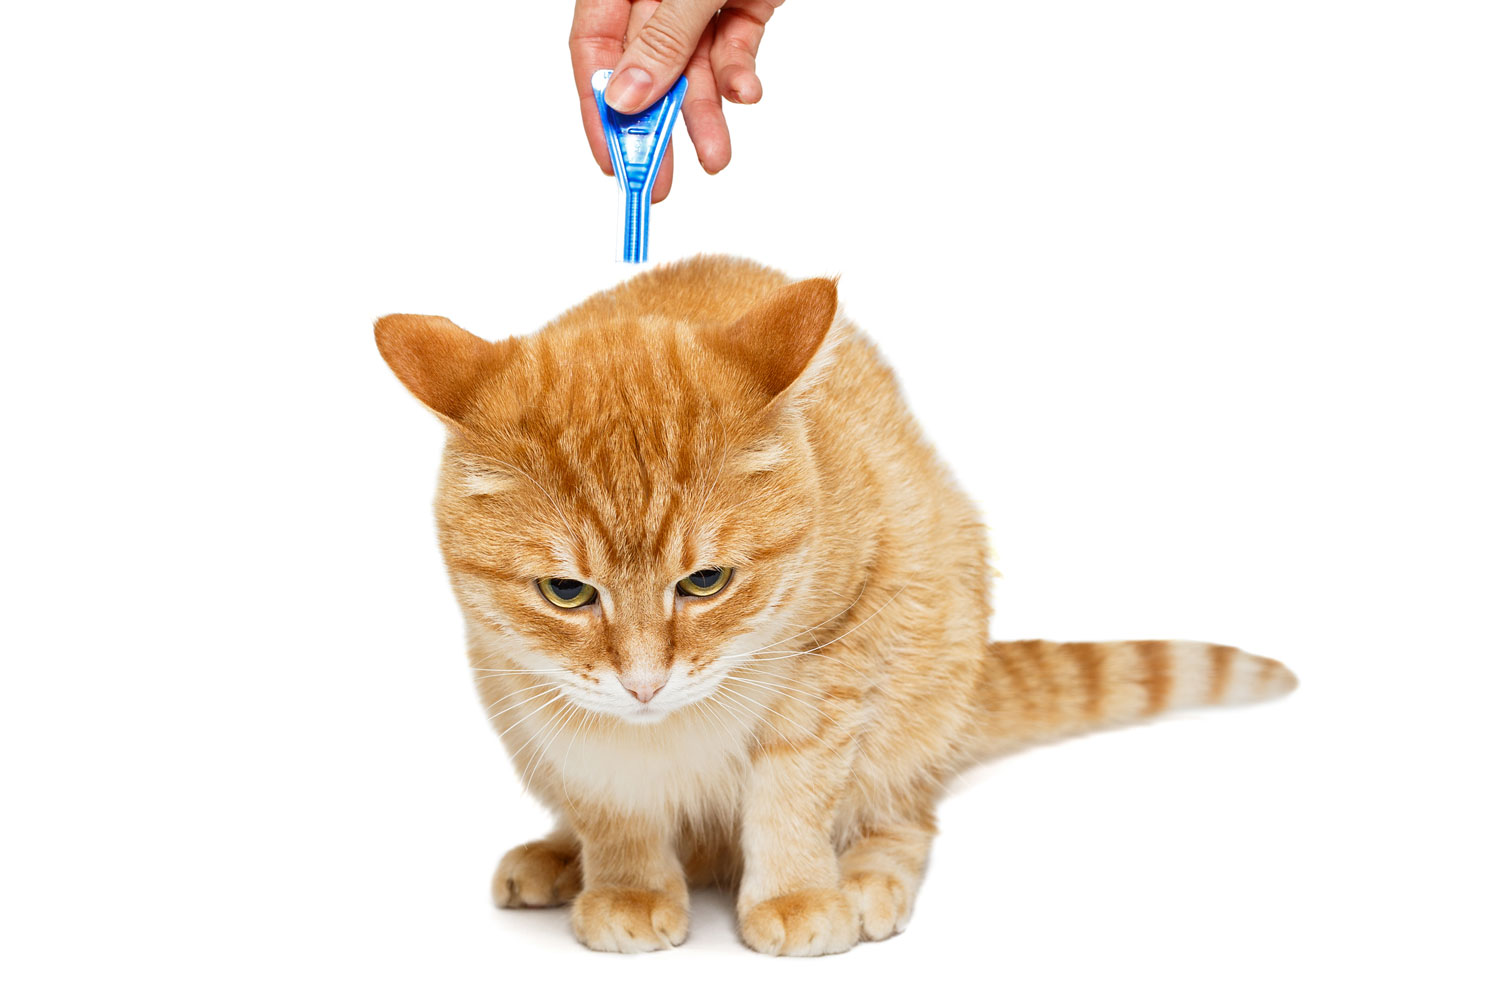 A cat receiving flea treatment from the vet